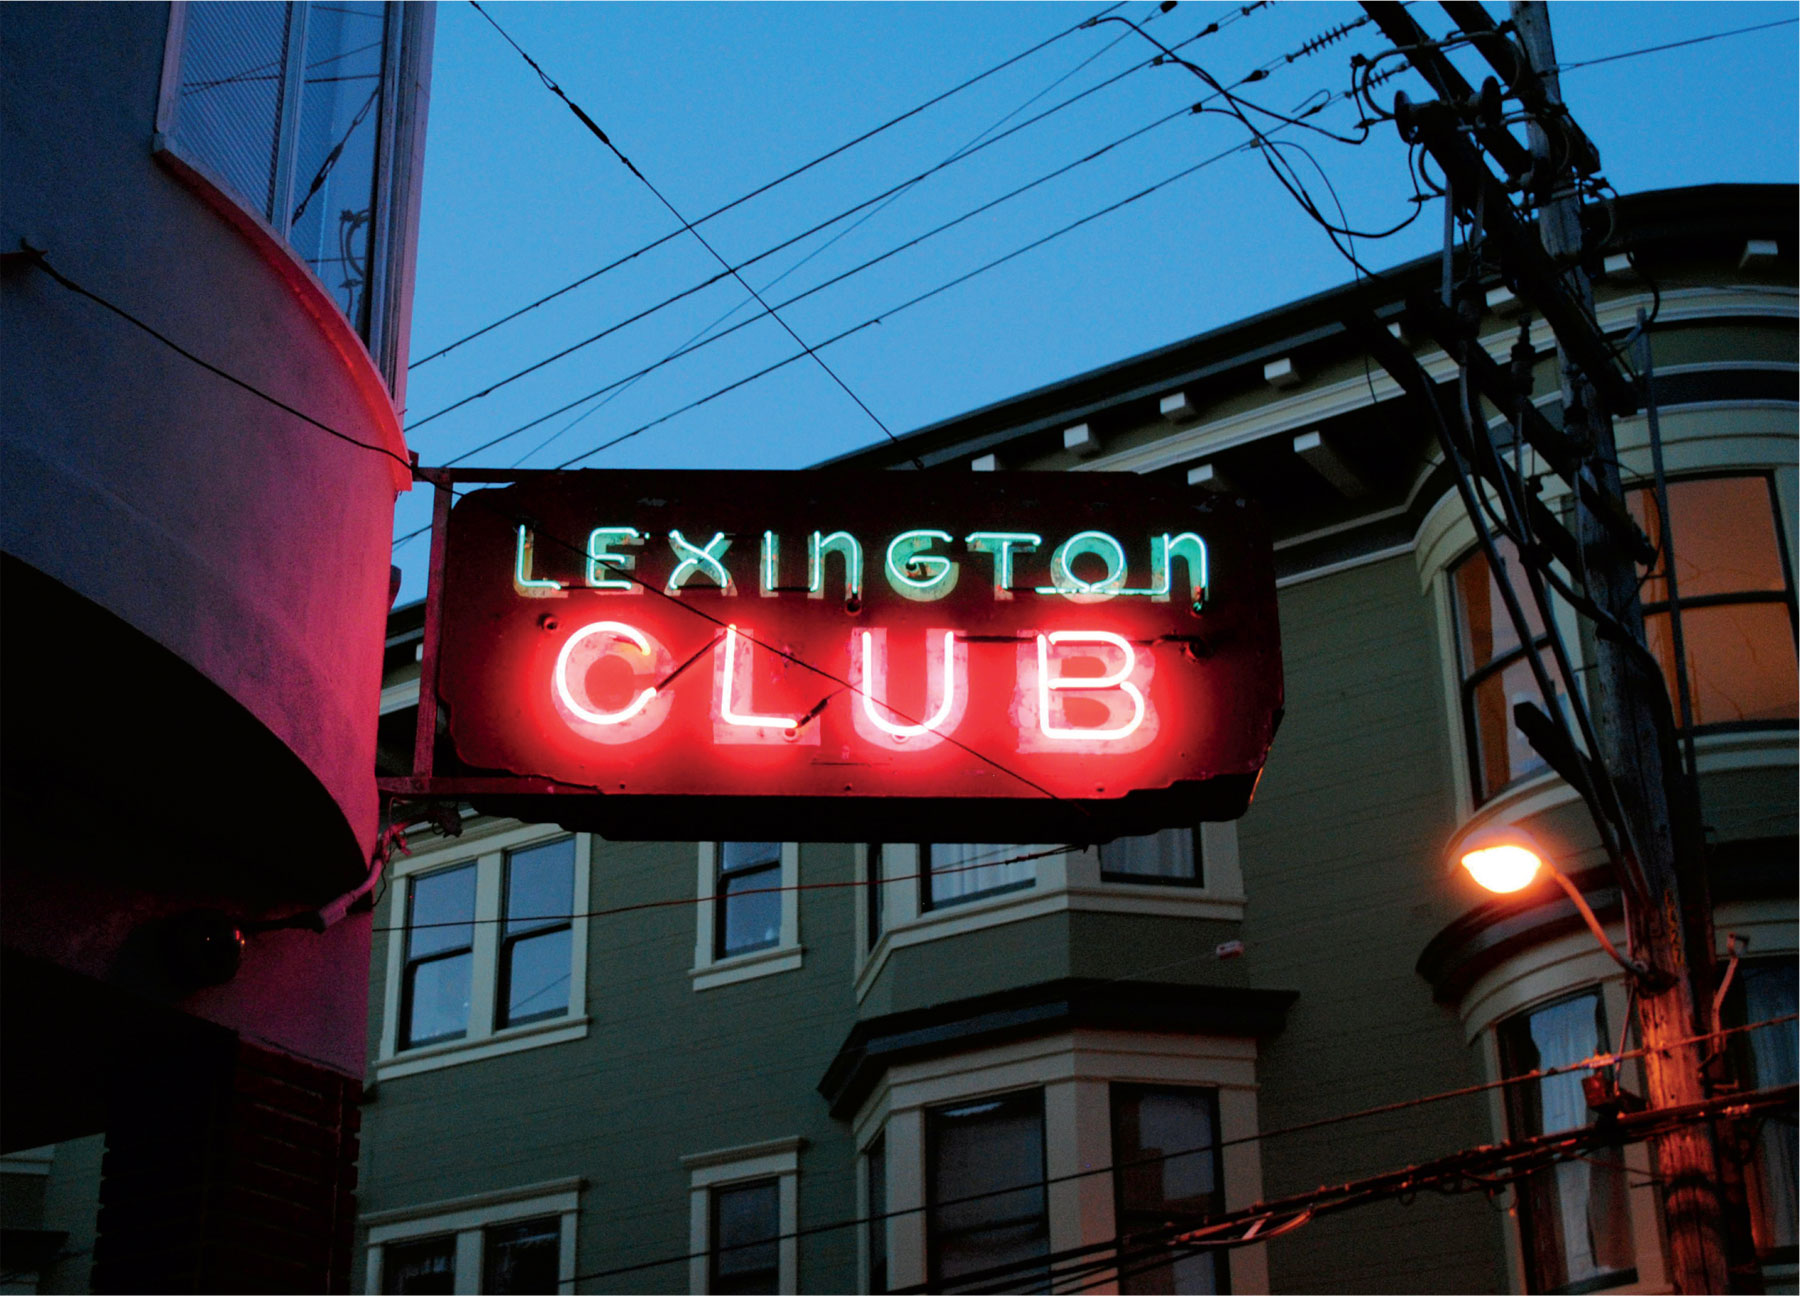 Lexington Club neon sign - 3464 19th Street, San Francisco